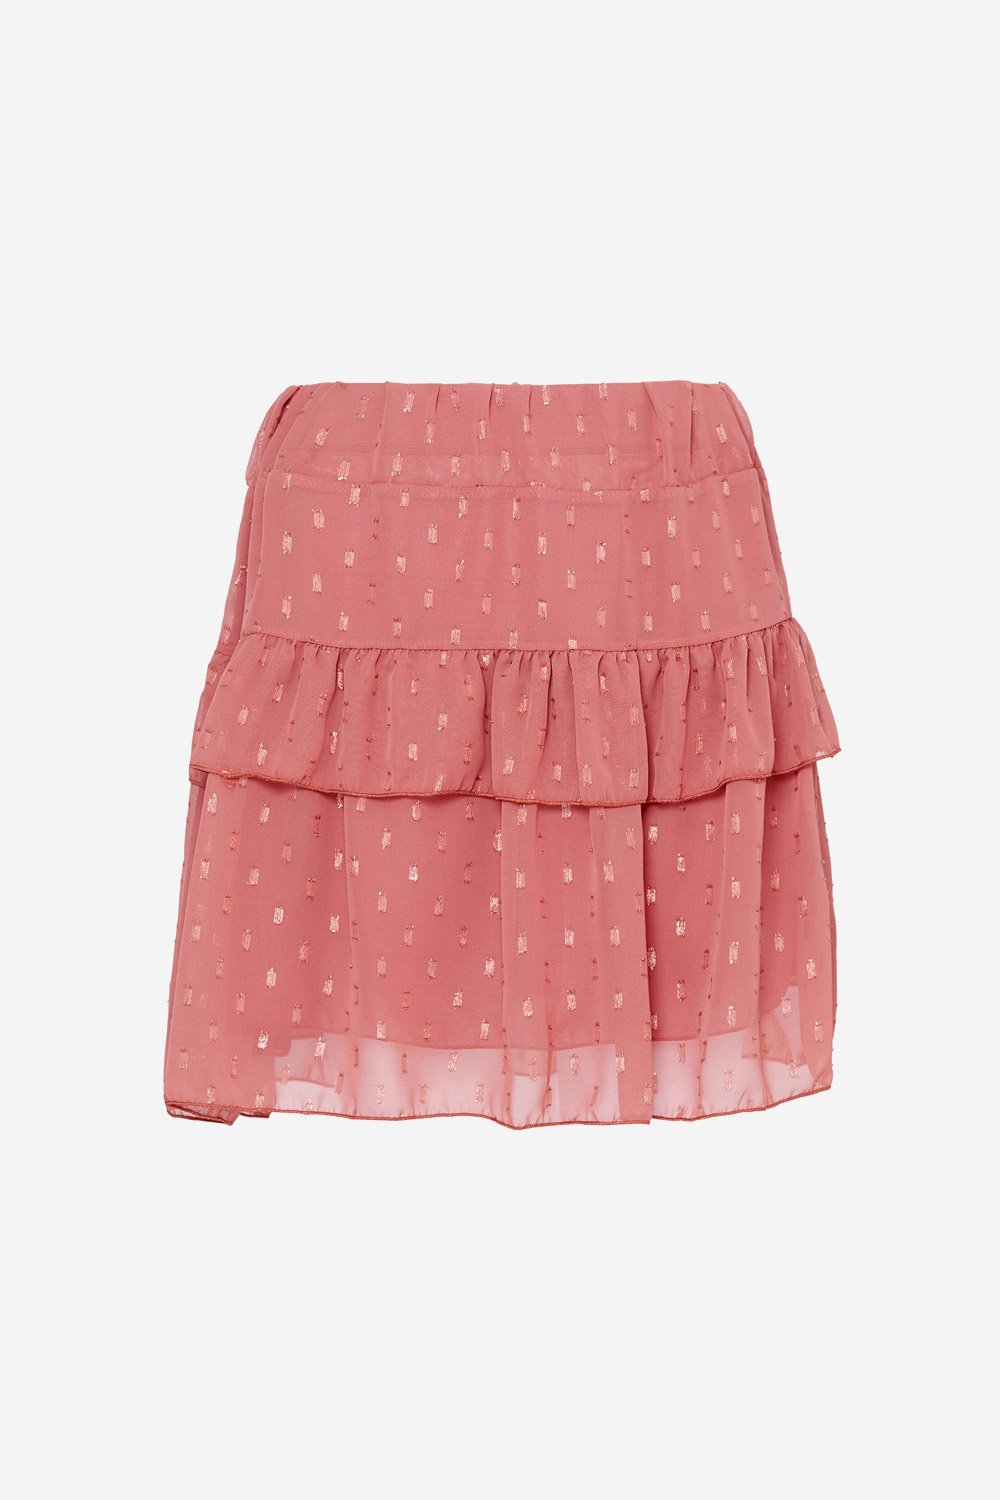 Zues Skirt Blush